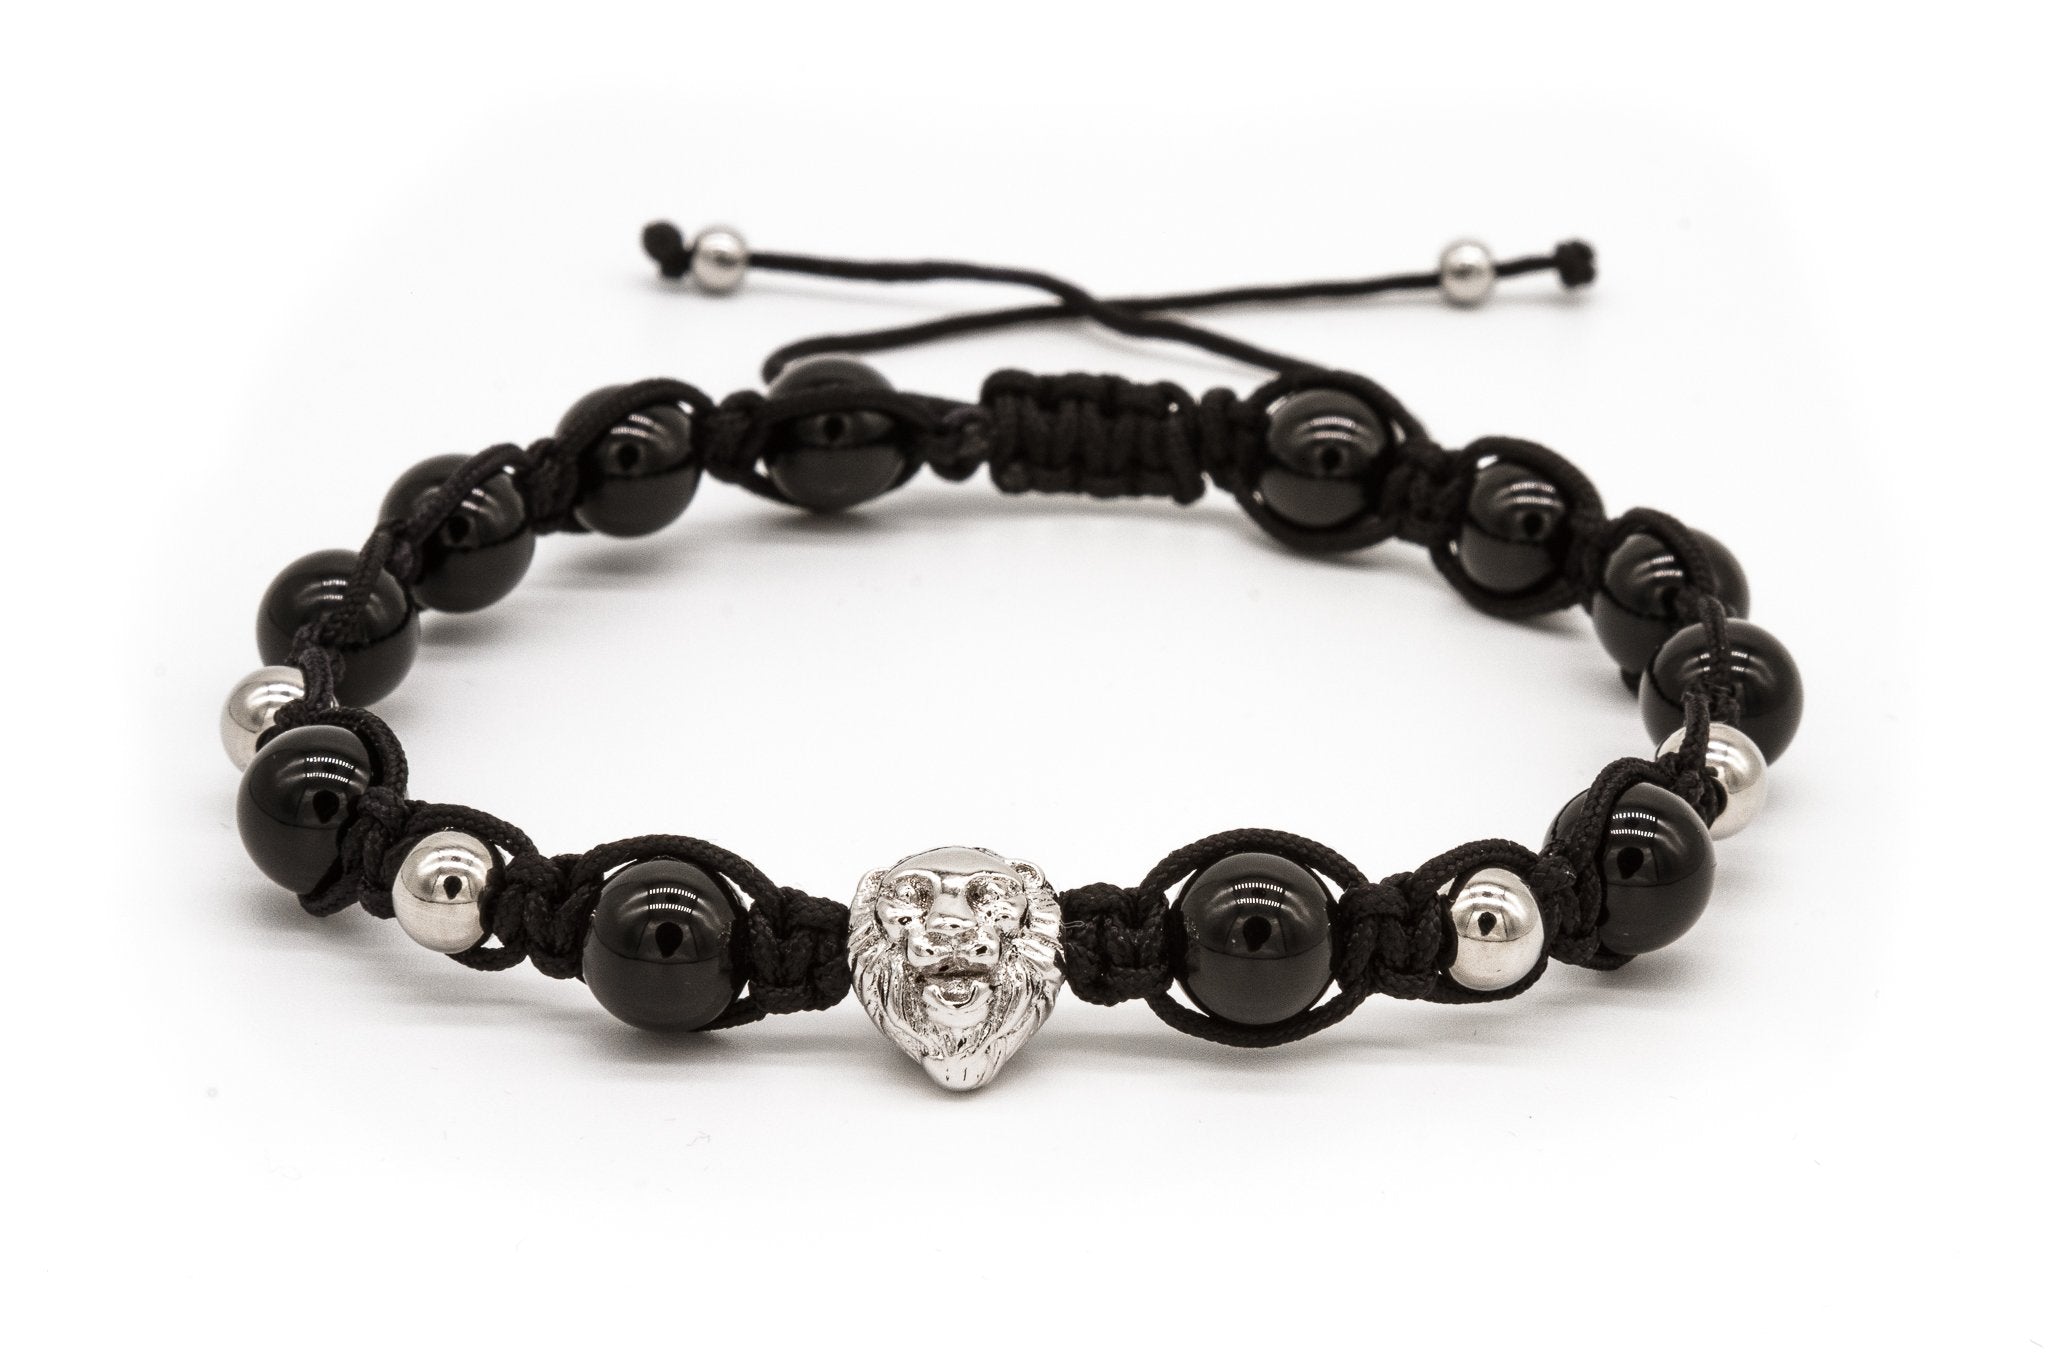 UNCOMMON Men's Beads Bracelet One Silver Lion Charm Black Onyx Beads